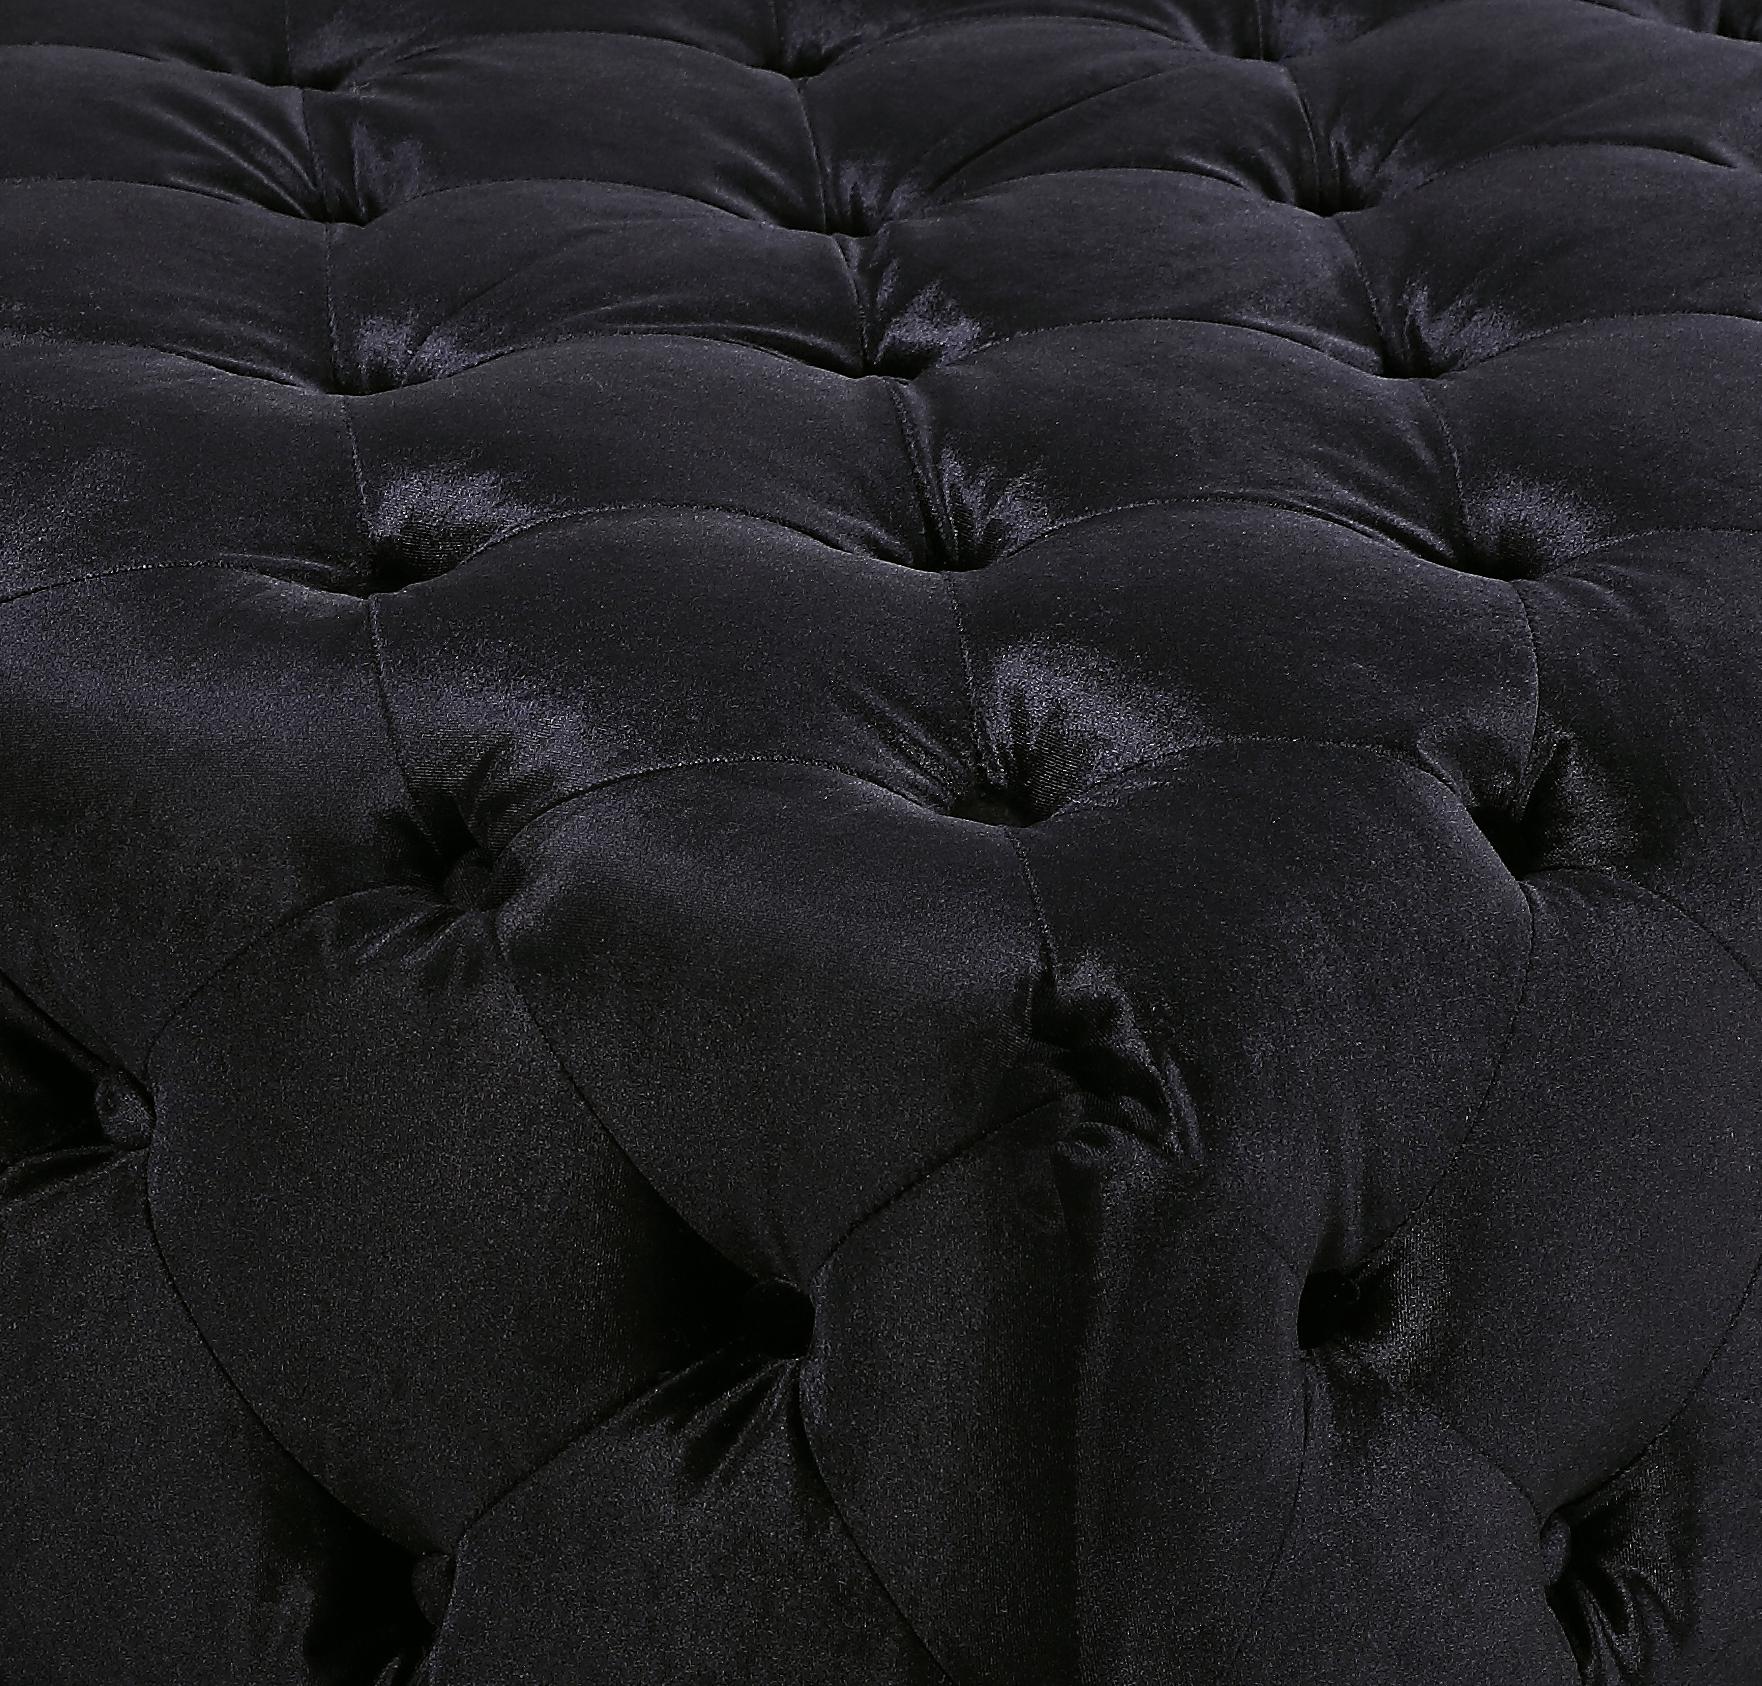 

    
Meridian Furniture 662 Chesterfield Ottoman in Black Velvet Contemporary
